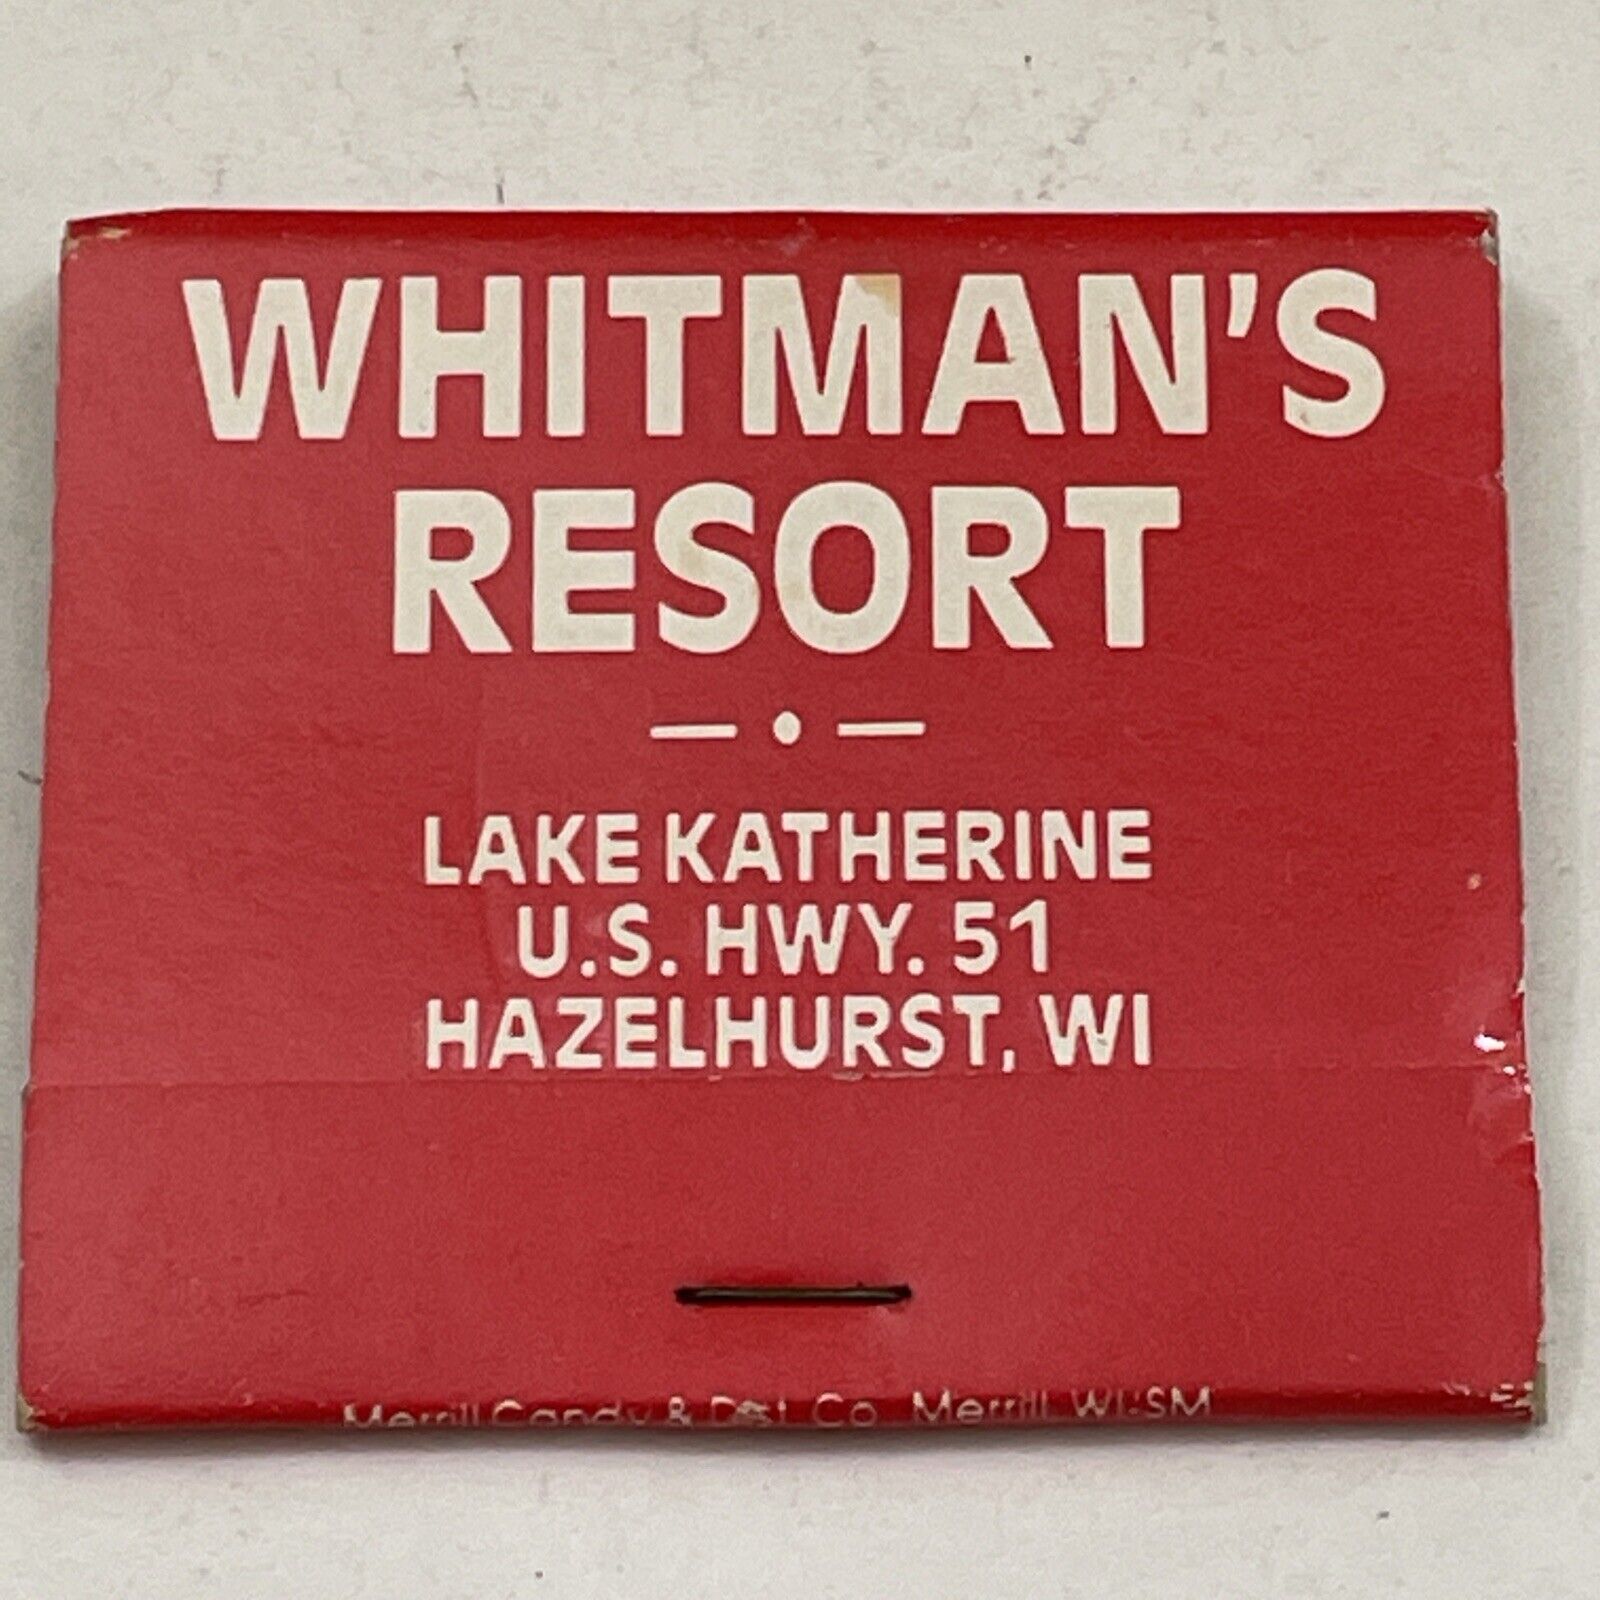 Vintage Matchbook Cover   Whitman’s Resort  Hazelhurst, WI   gmg  unstruck